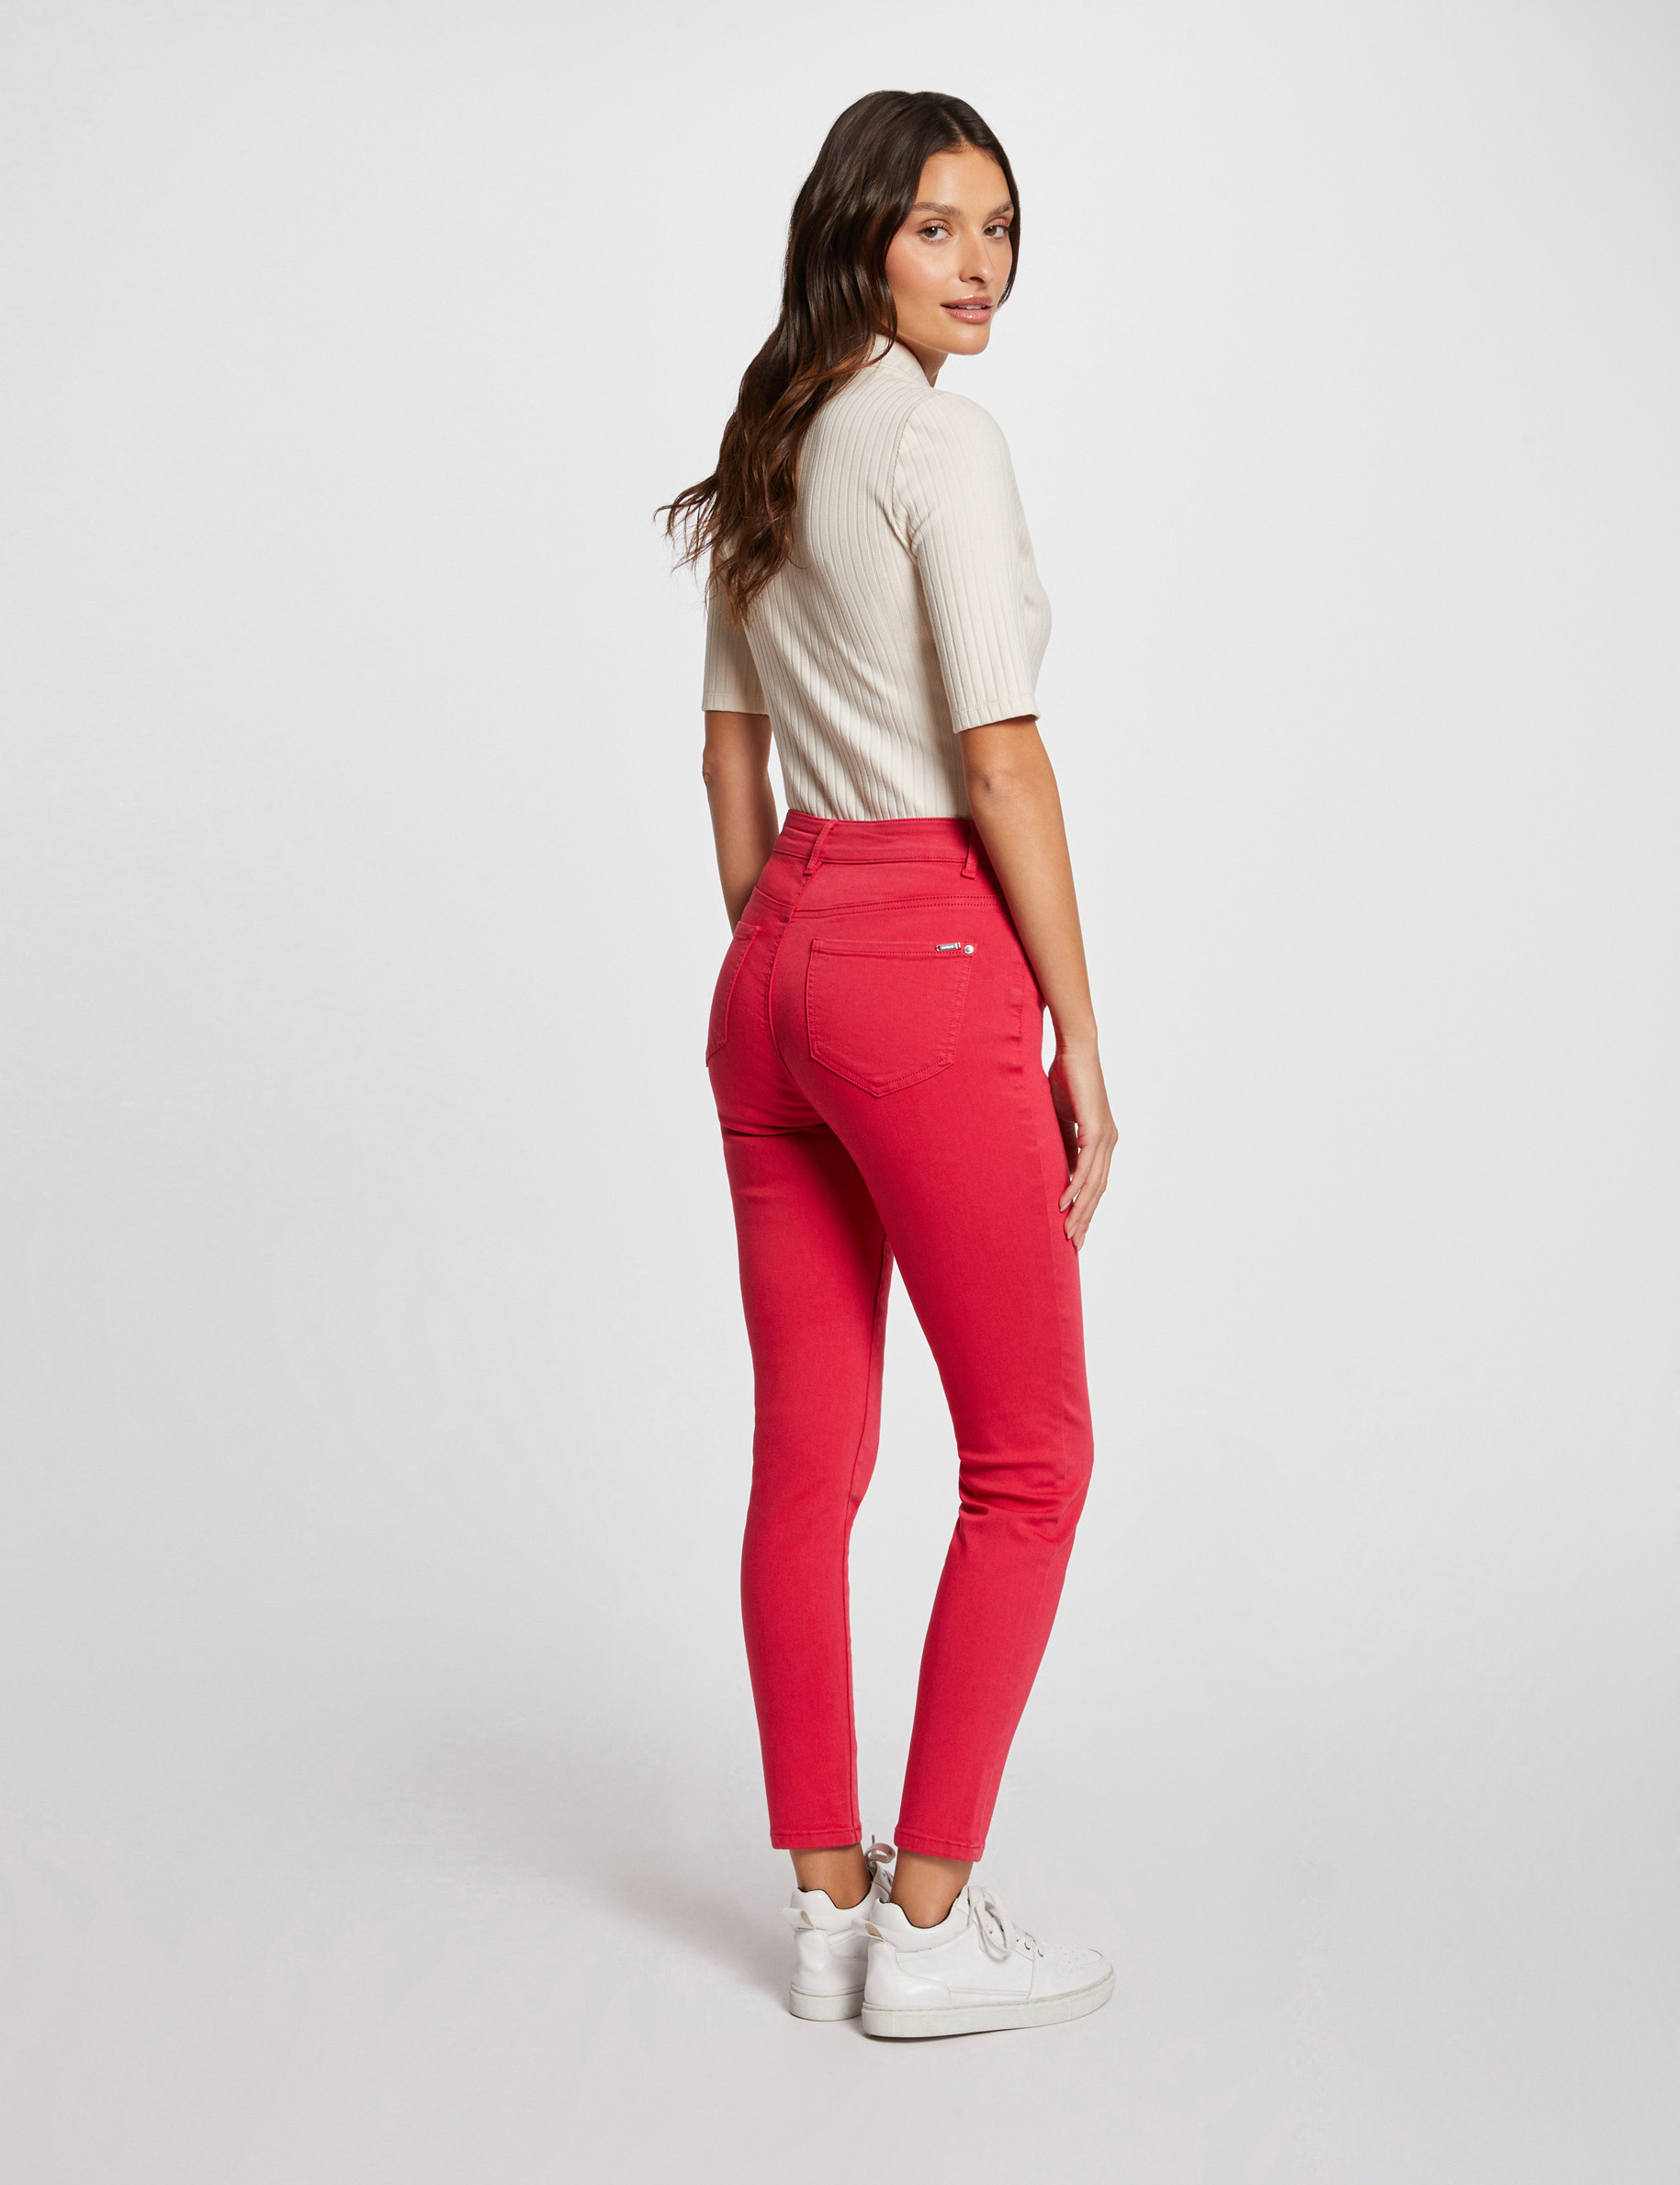 Pantalon skinny 7/8ème 5 poches rouge moyen femme